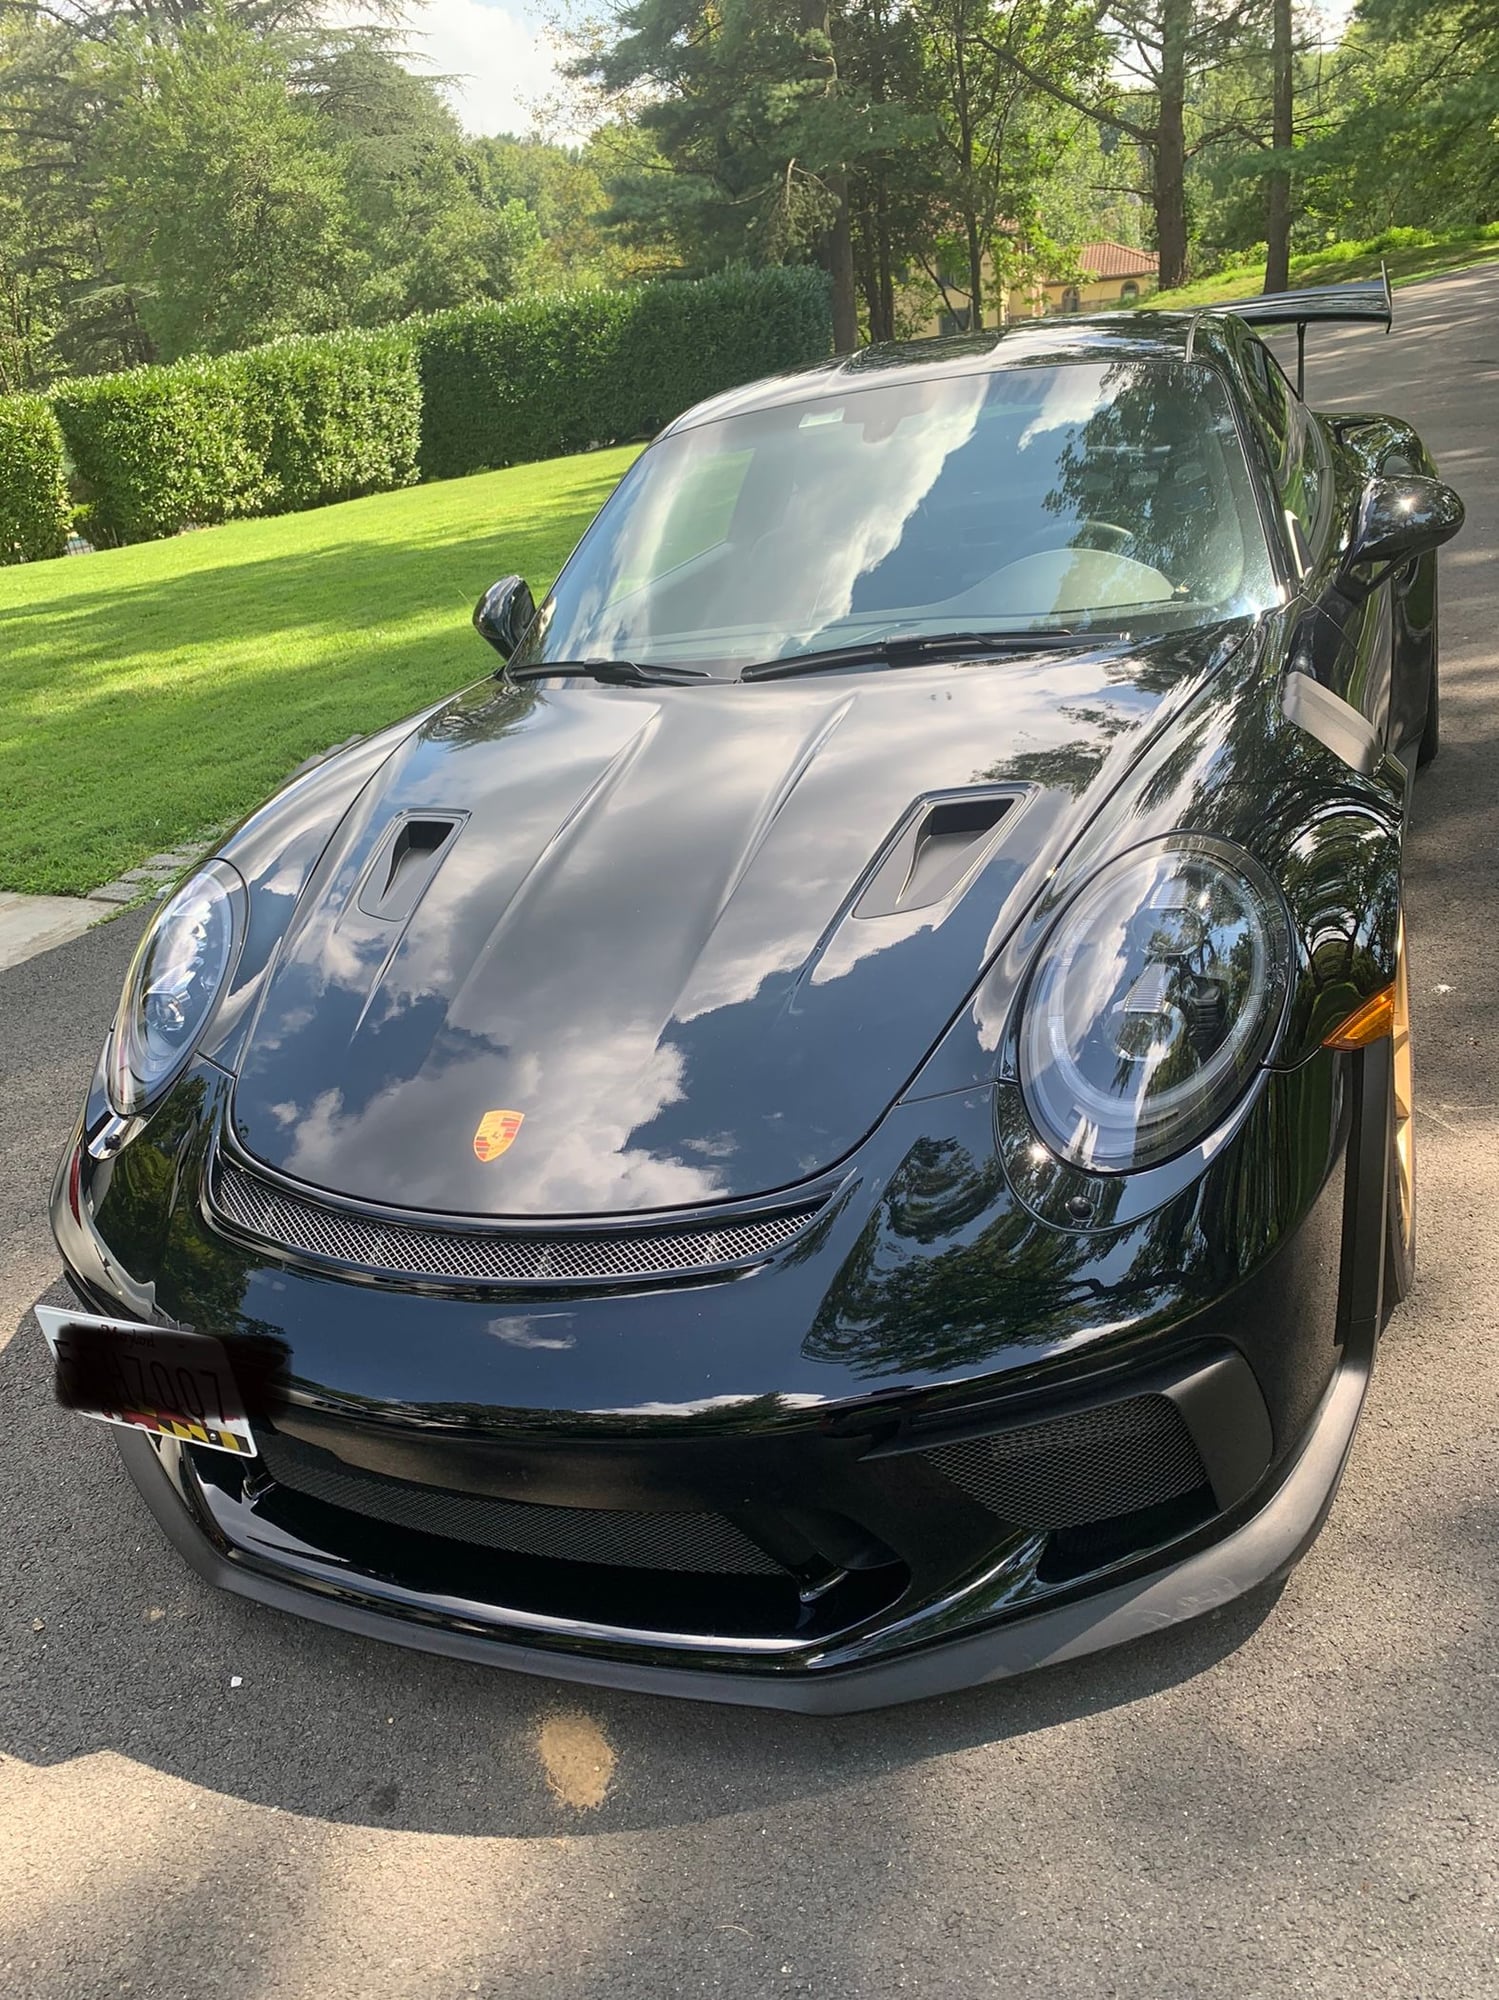 2019 Porsche GT3 - 2019 GT3 RS - Used - VIN WP0AF2A91KS165171 - 8,695 Miles - 6 cyl - 2WD - Automatic - Sedan - Black - Potomac, MD 20854, United States